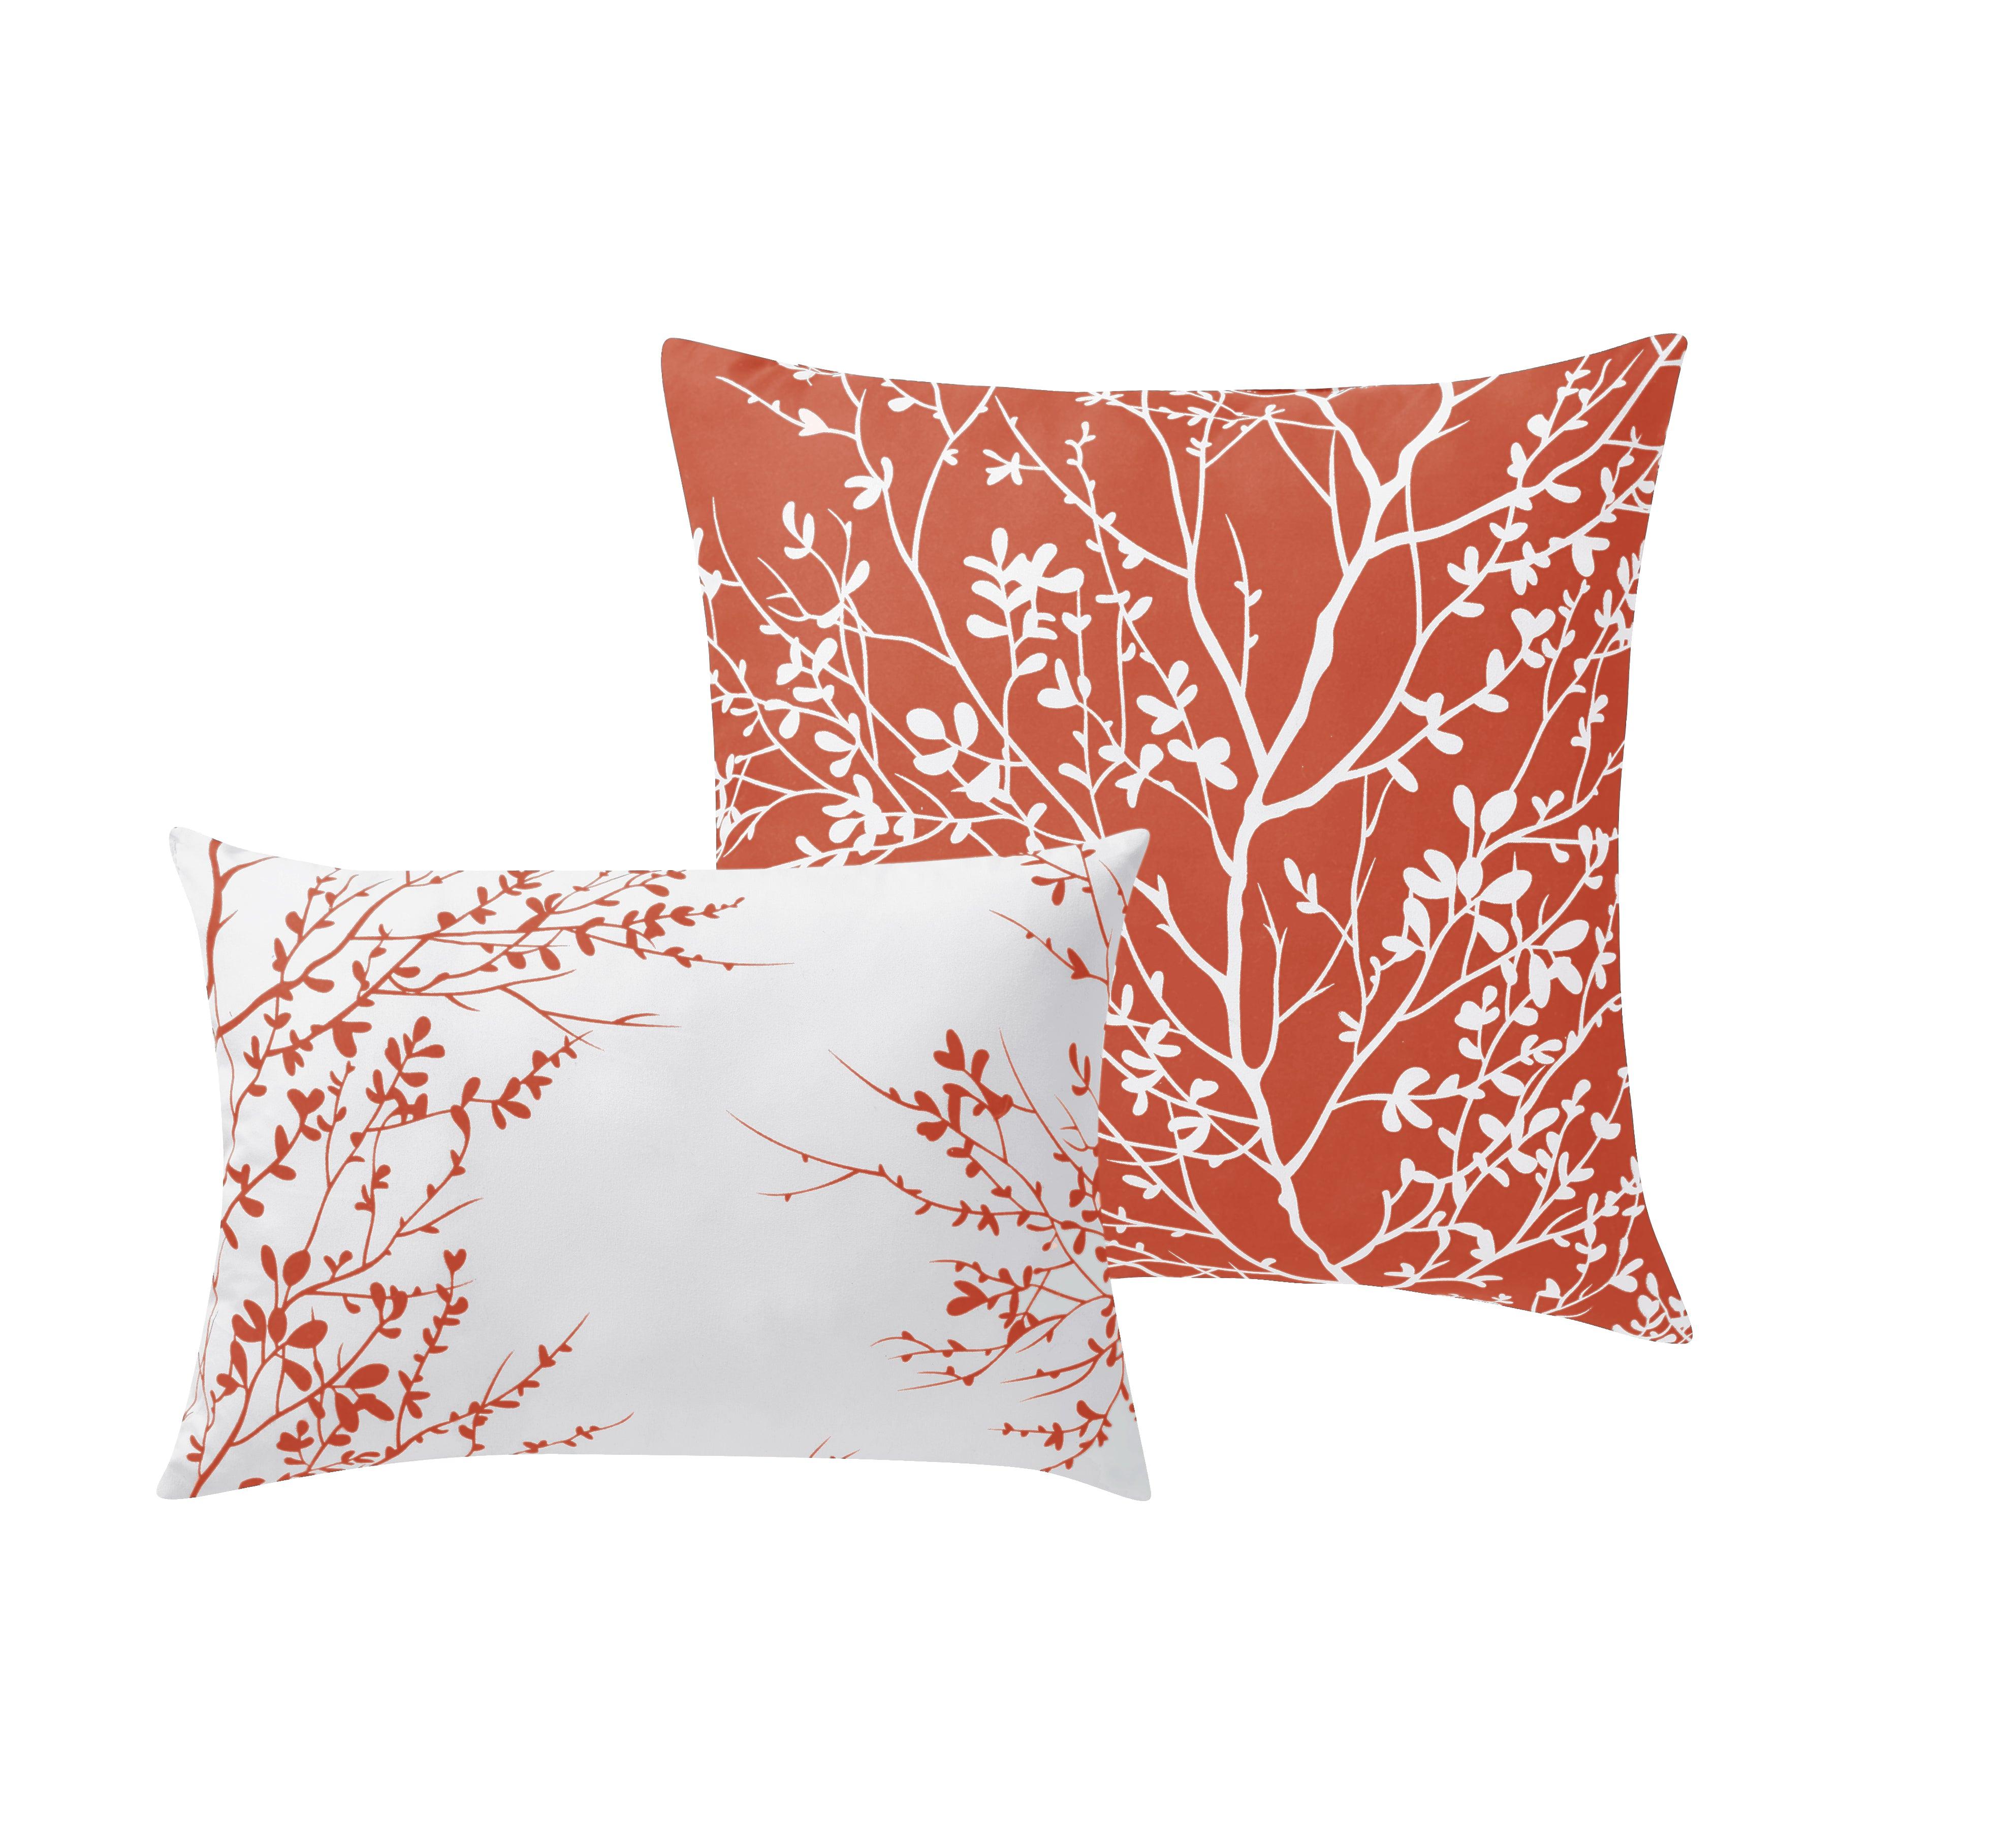 Foliage Reversible Comforter Set + Two Free Sham Pillows - Spirit Linen - Coral